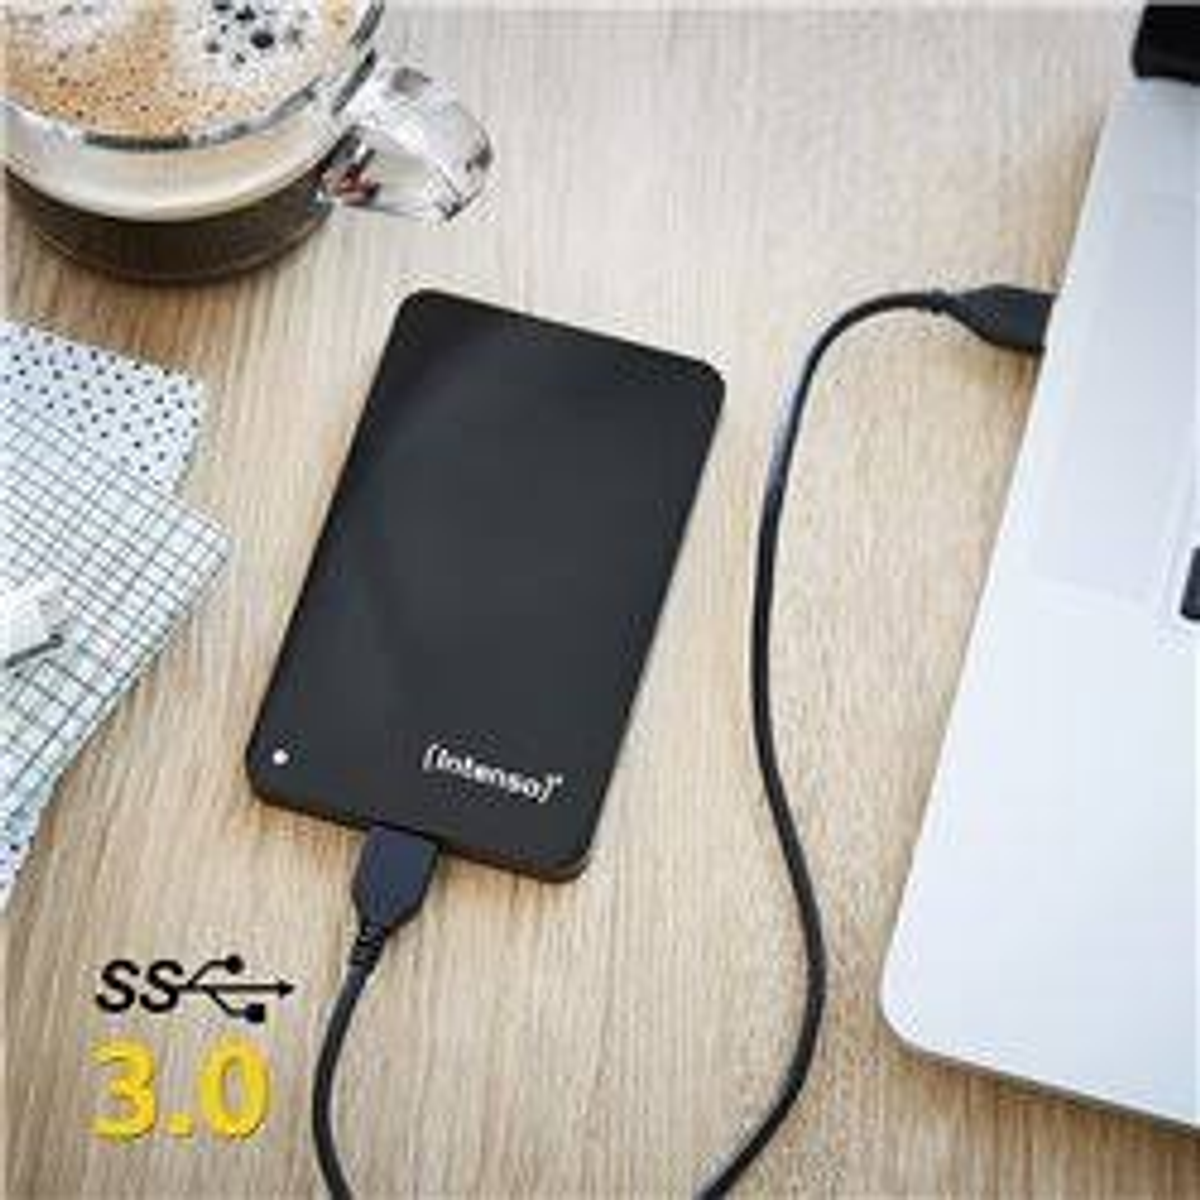 4 HDD Memory TB INTENSO Portable 2,5\